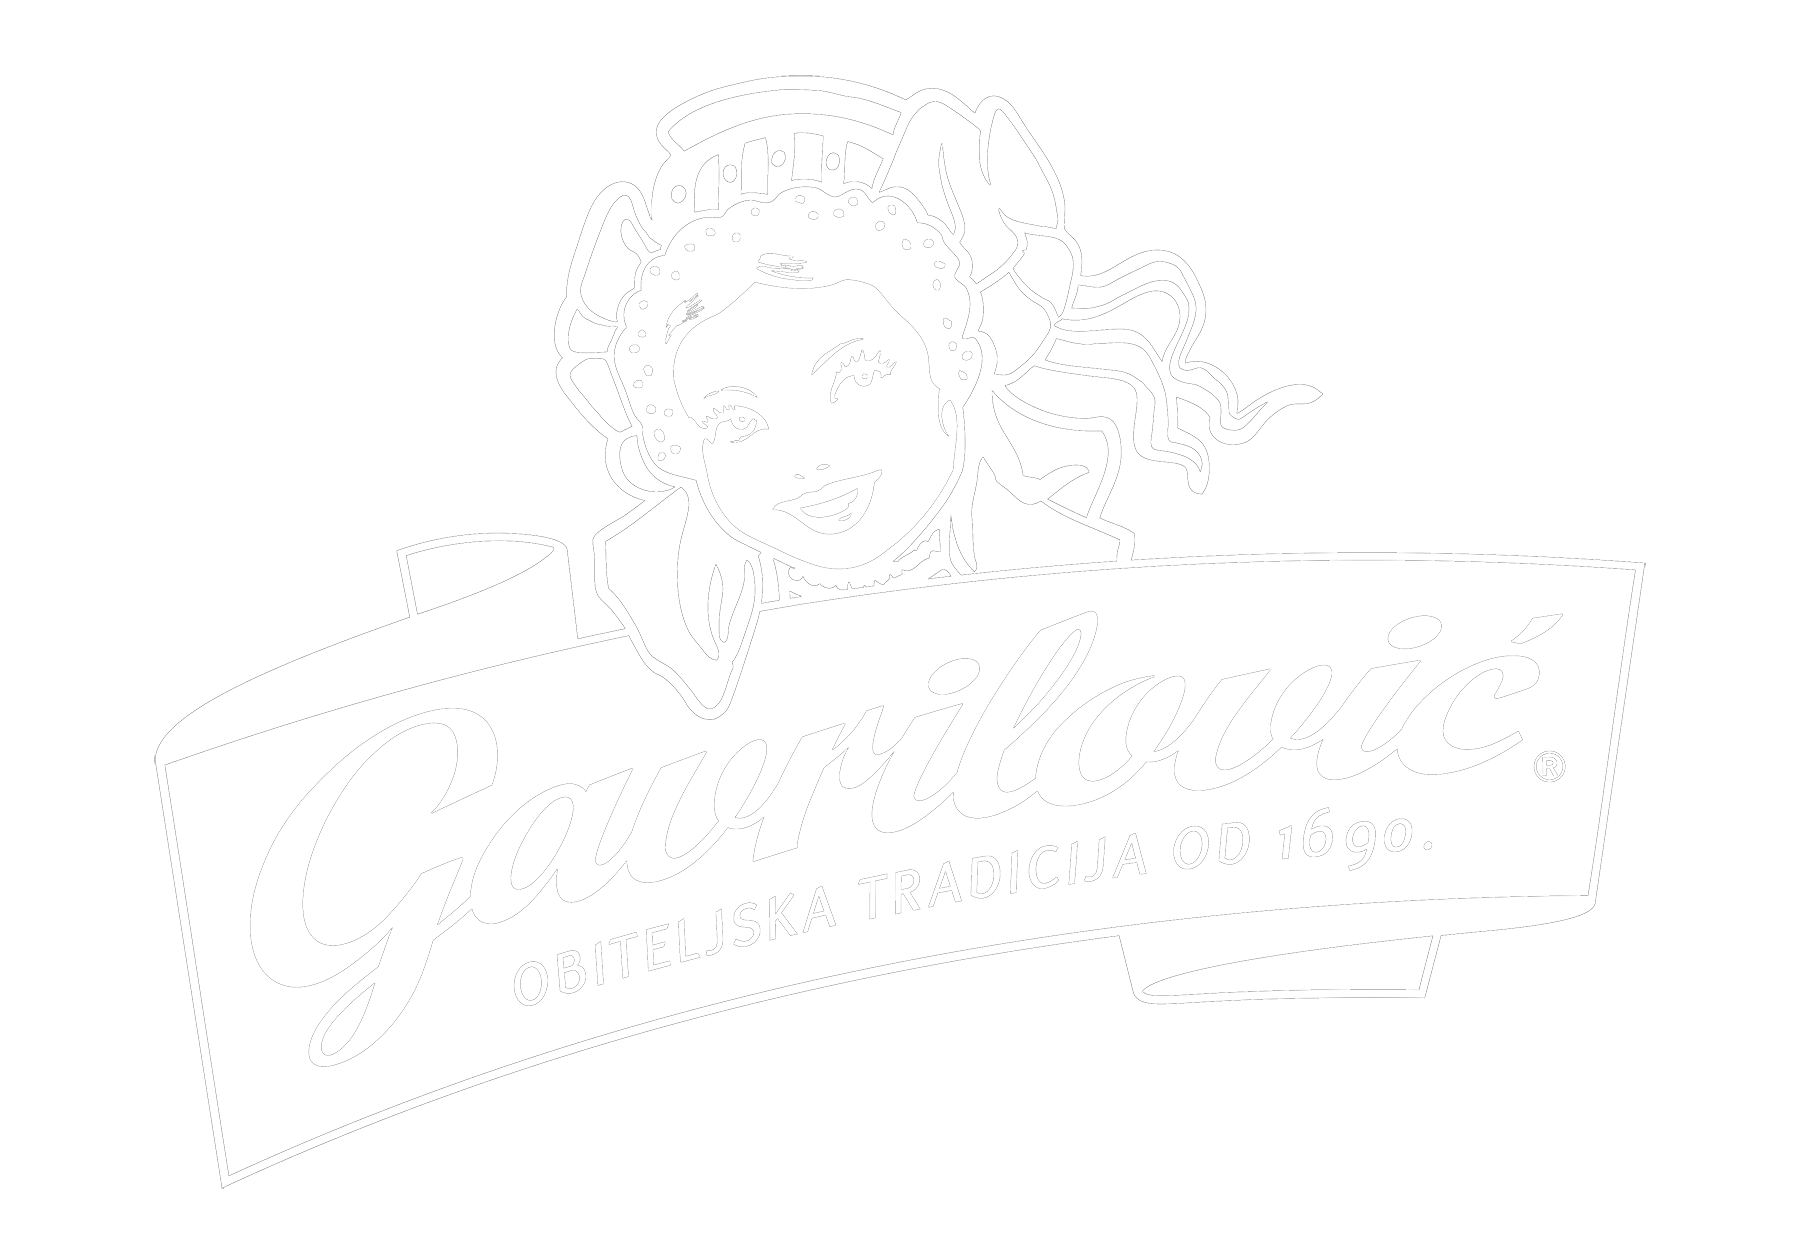 Gavrilovic